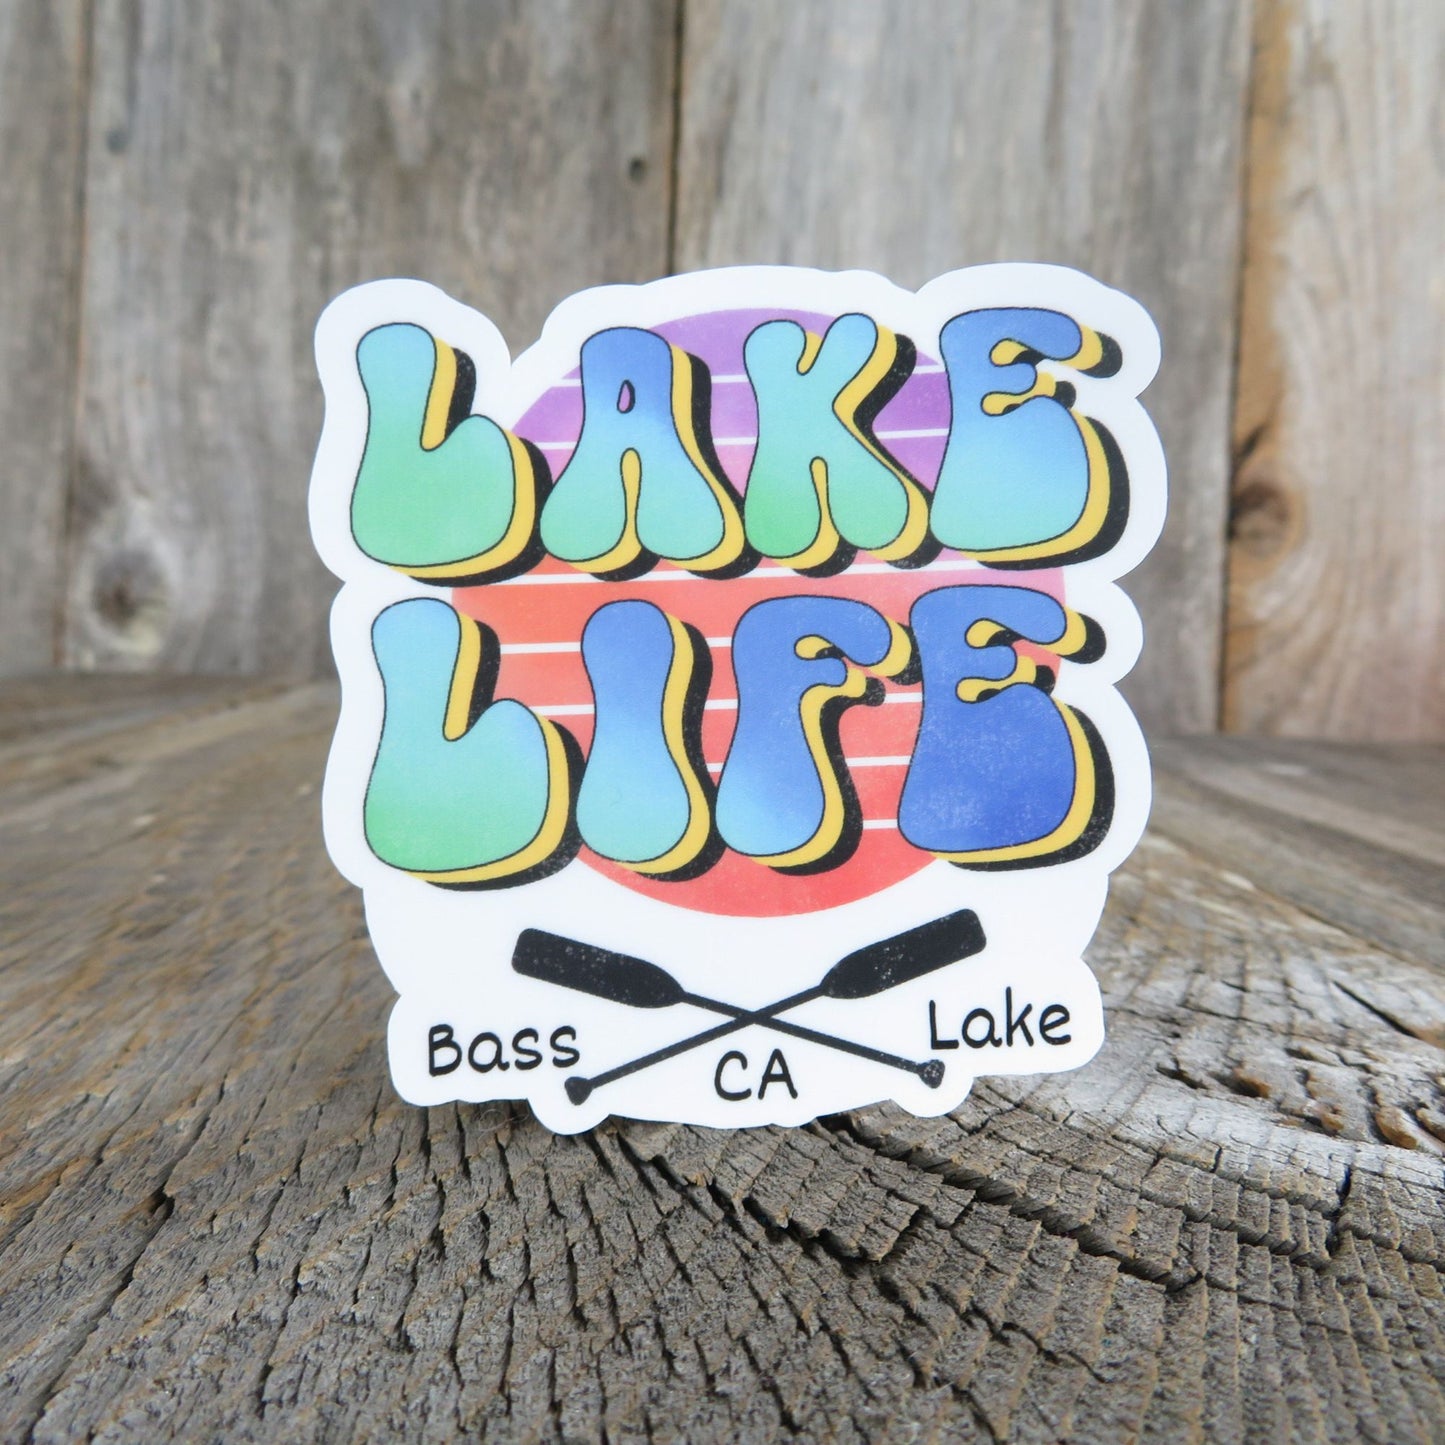 Bass Lake California Sticker Lake Life Sticker Waterproof Camping Outdoors Yosemite Vacation Souvenir